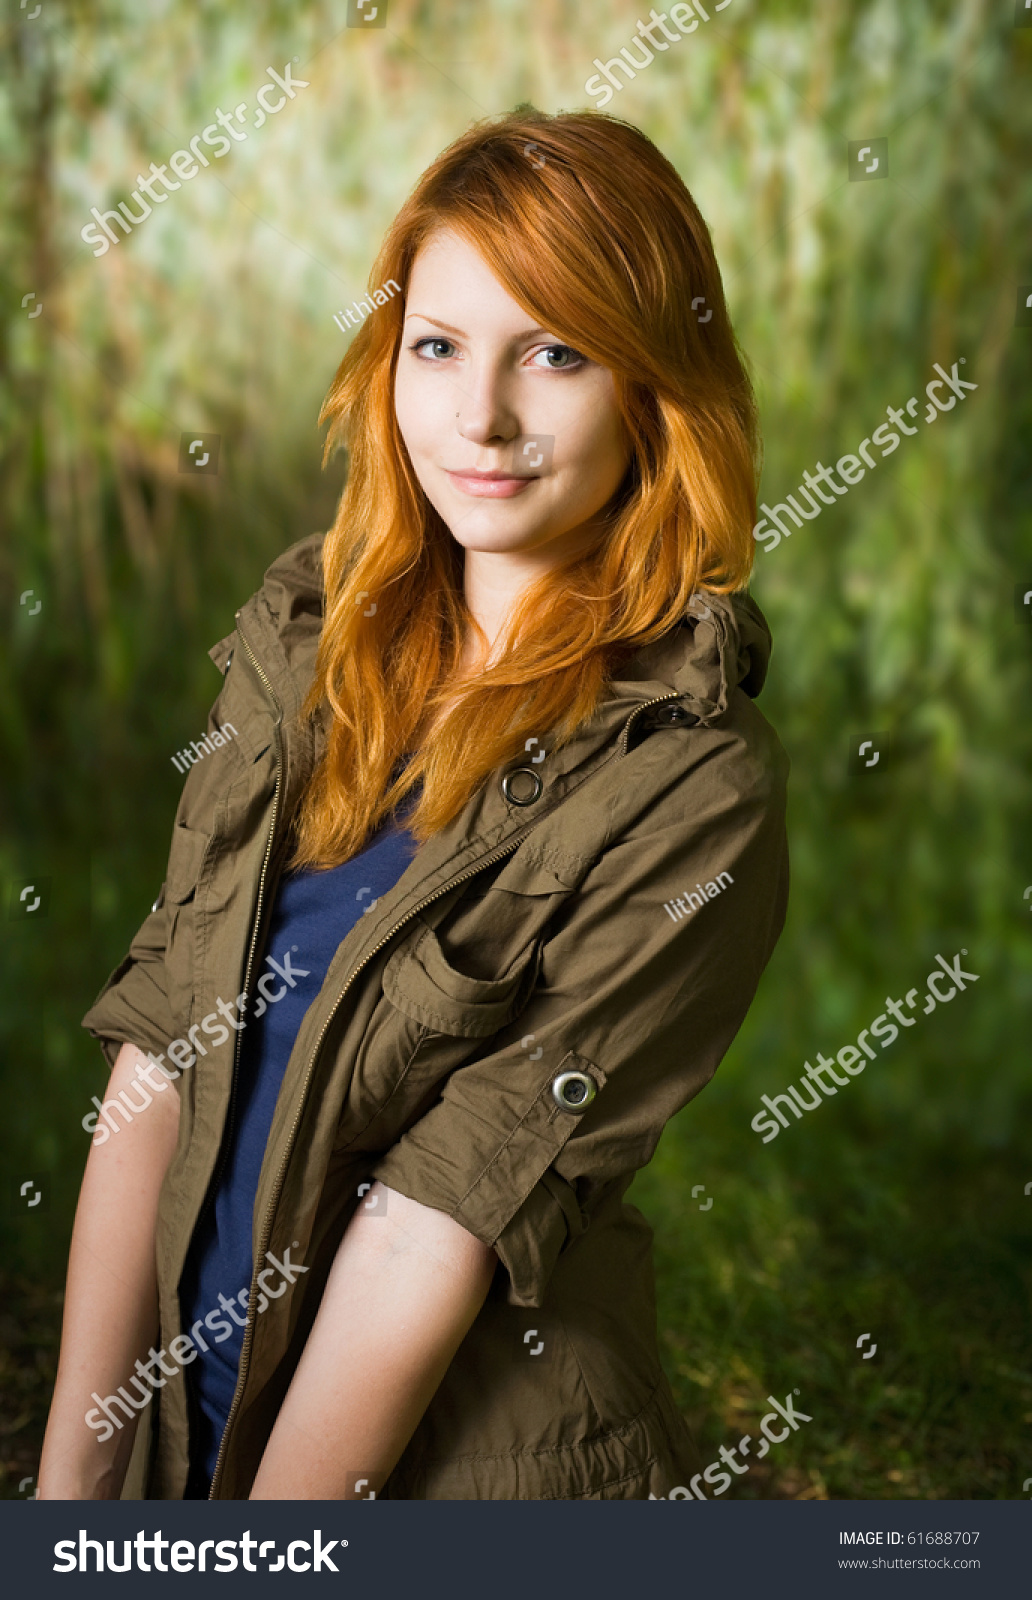 Best of Teen redhead pics